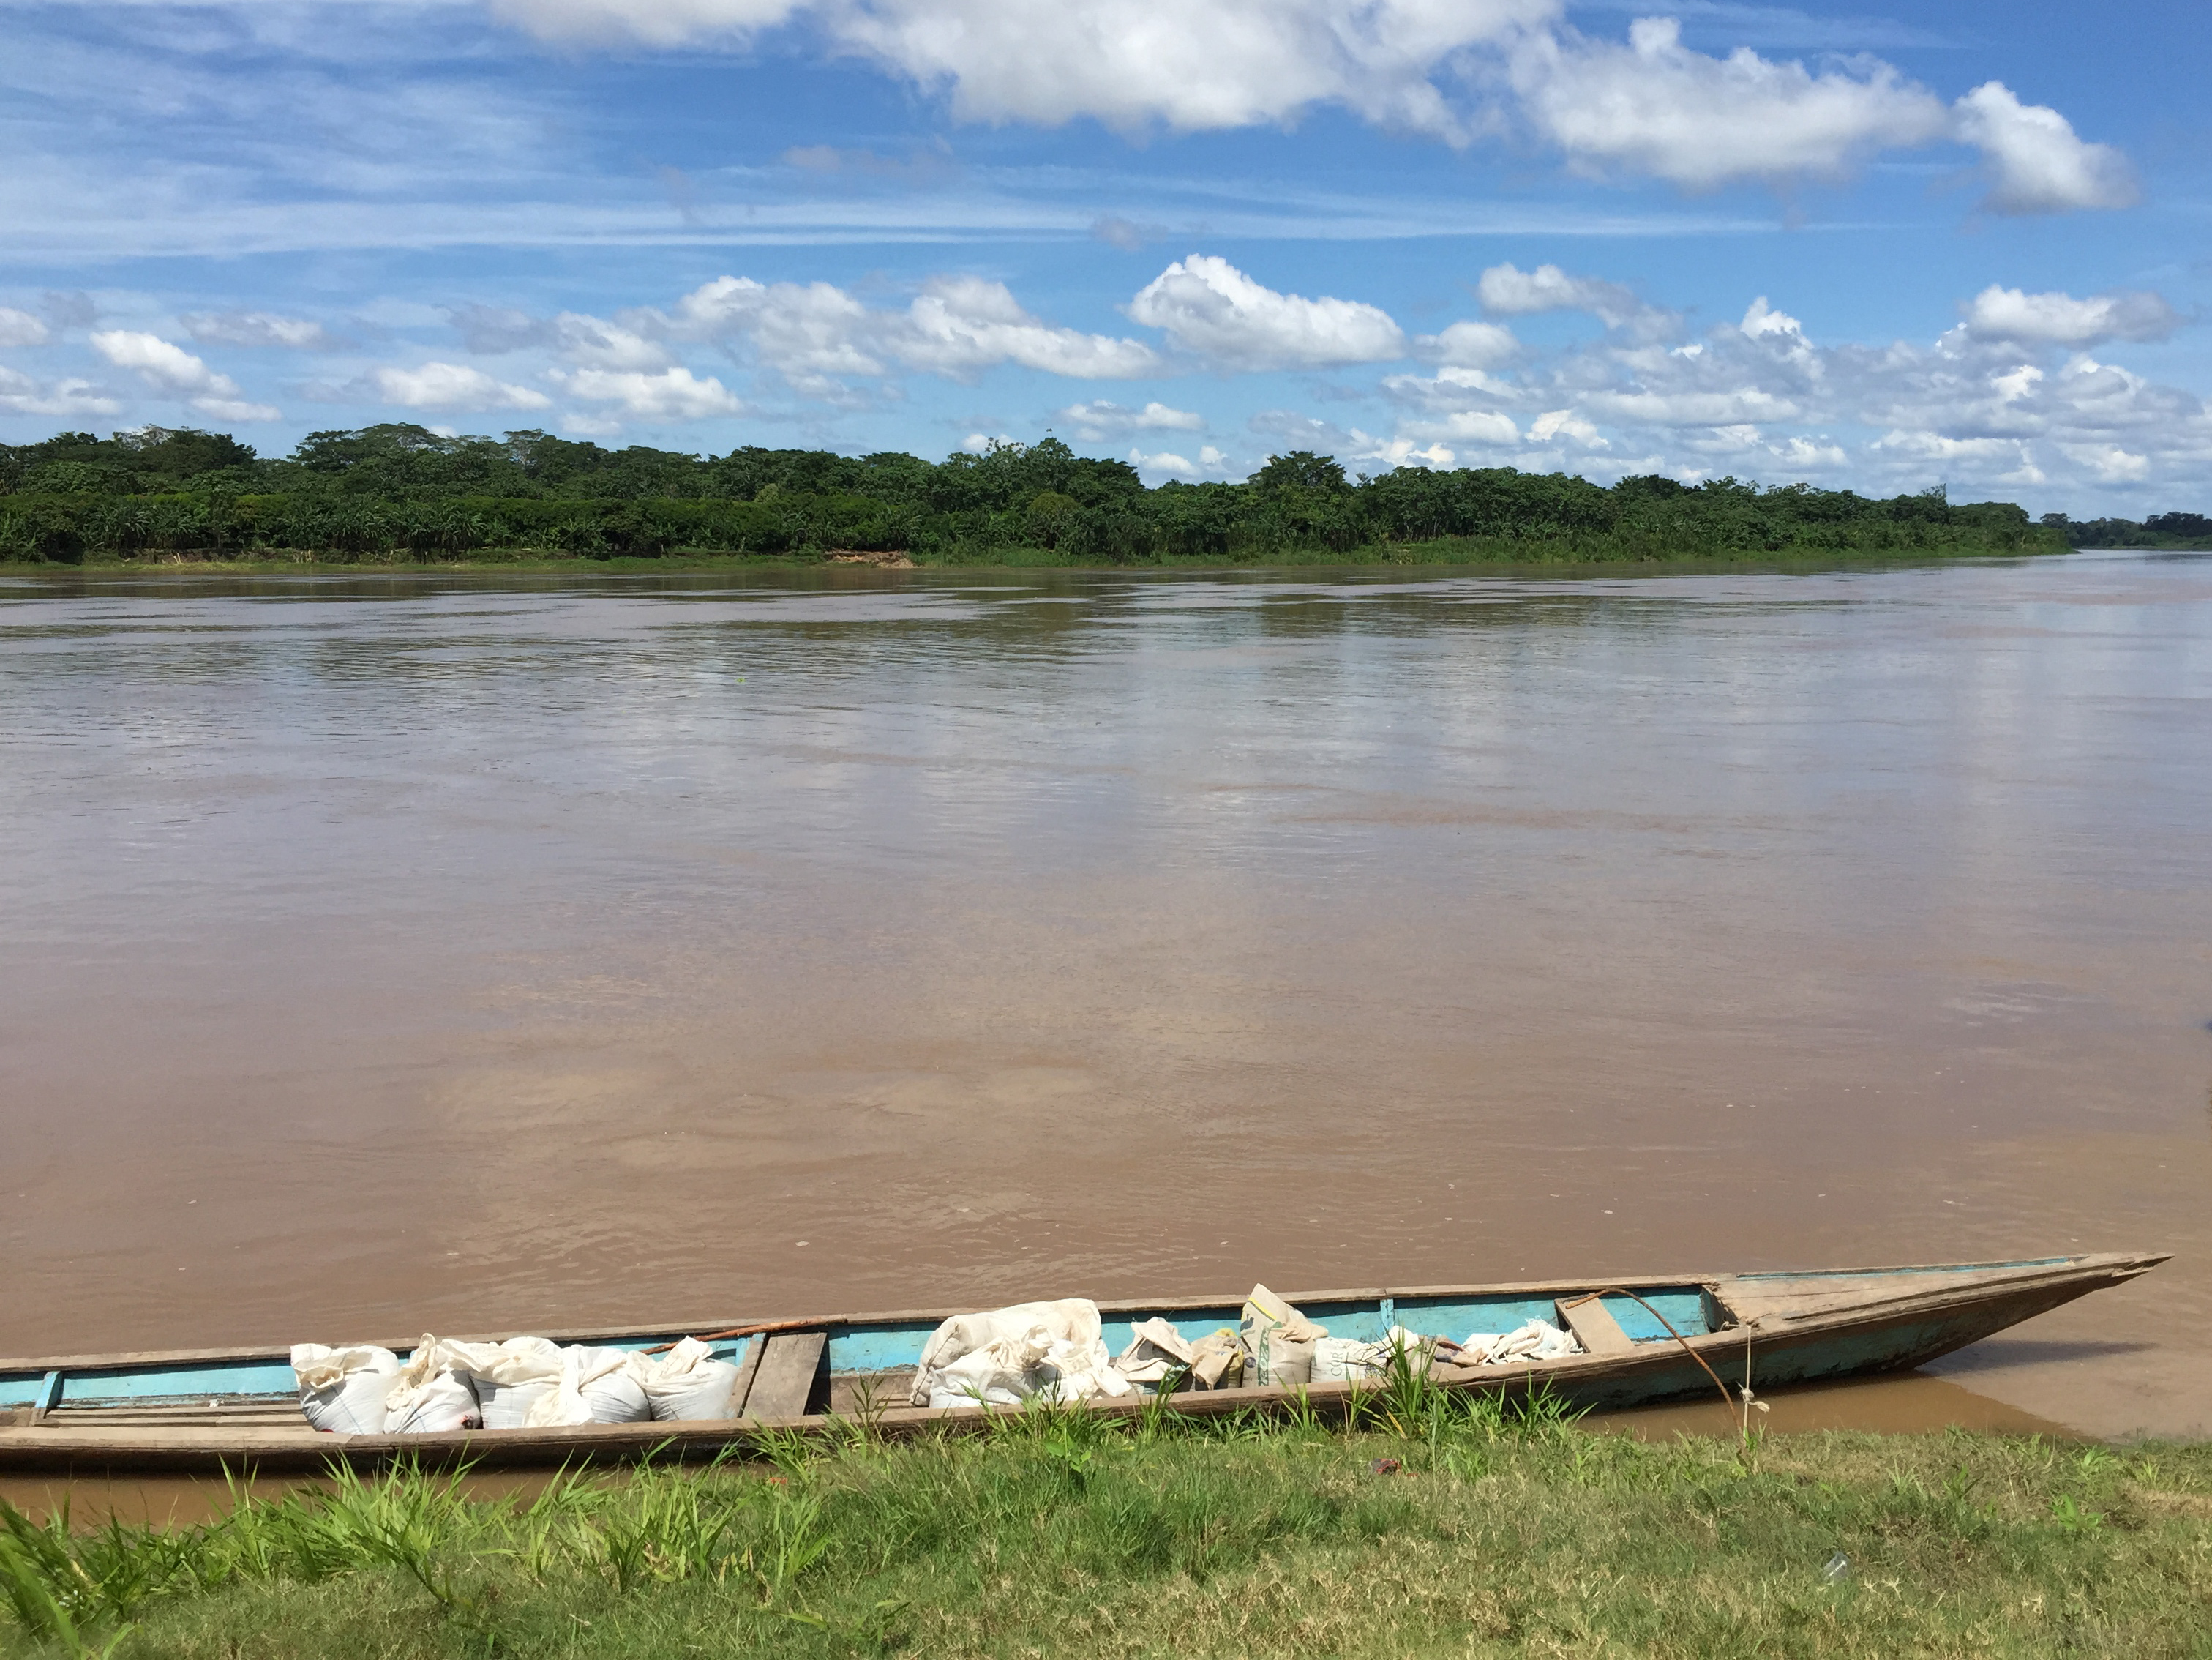 Judiciary recognizes rights to the Marañón River in Peru